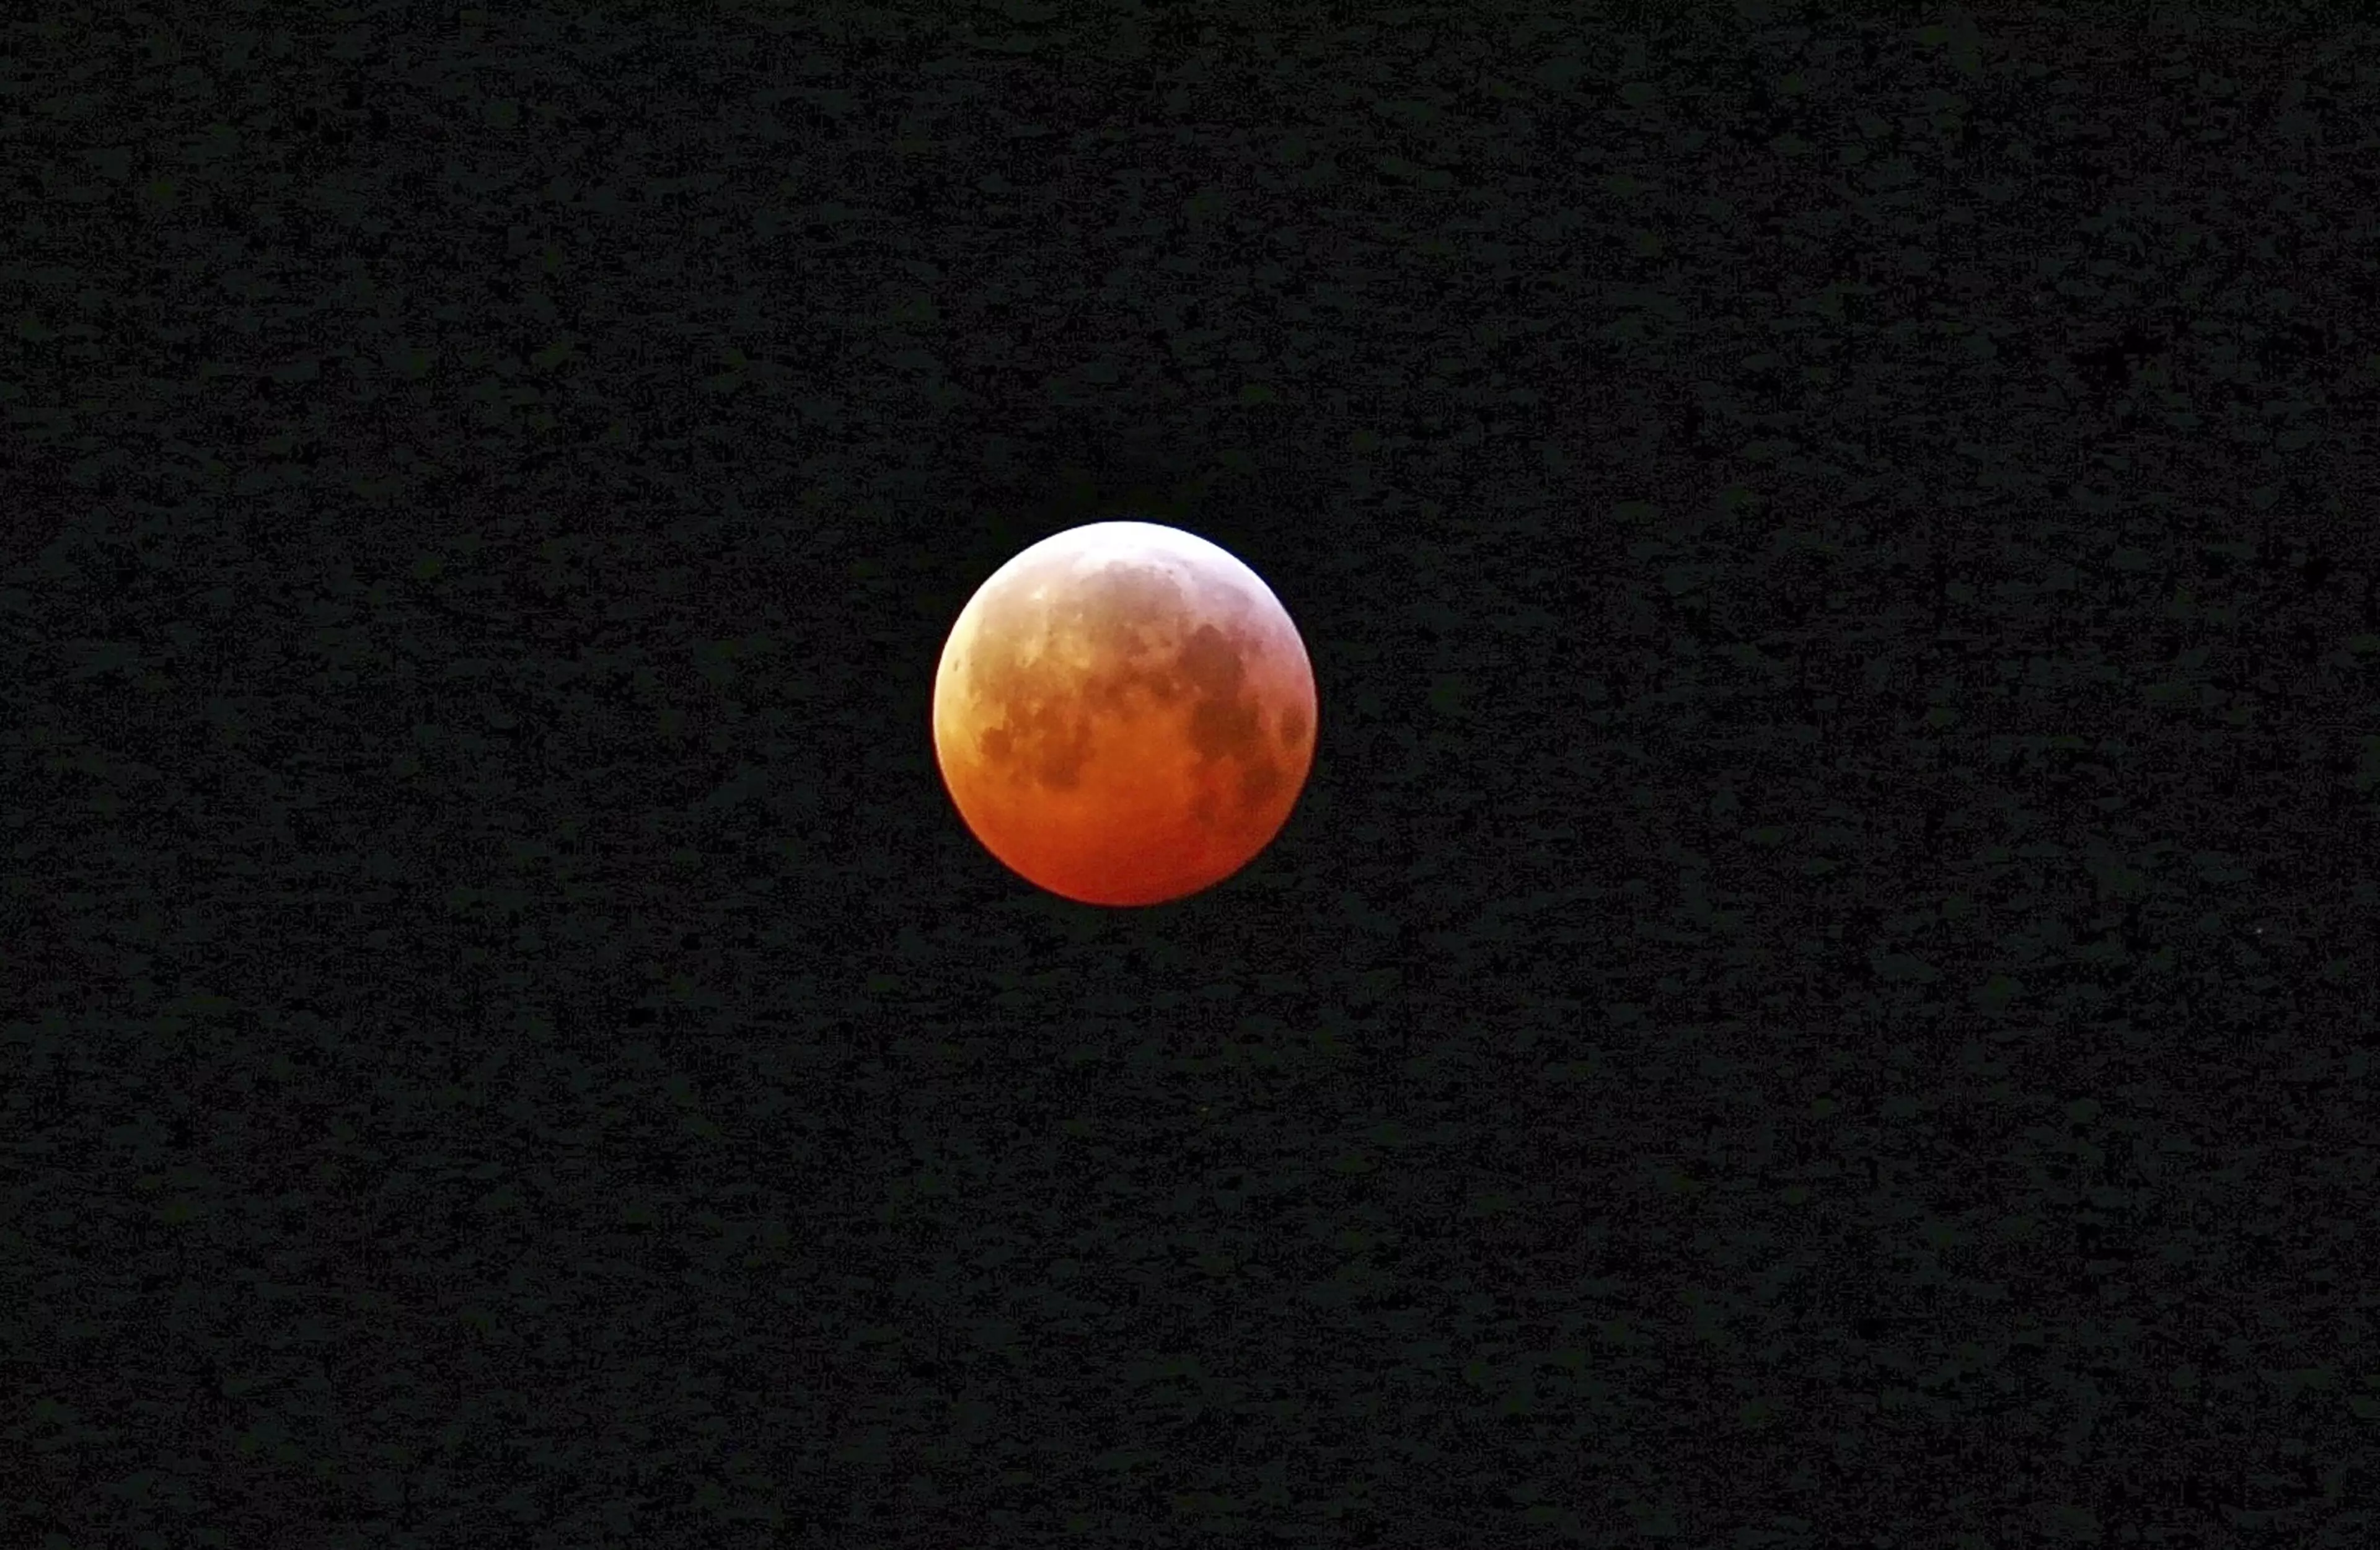 A super blood moon lit up the sky last month.